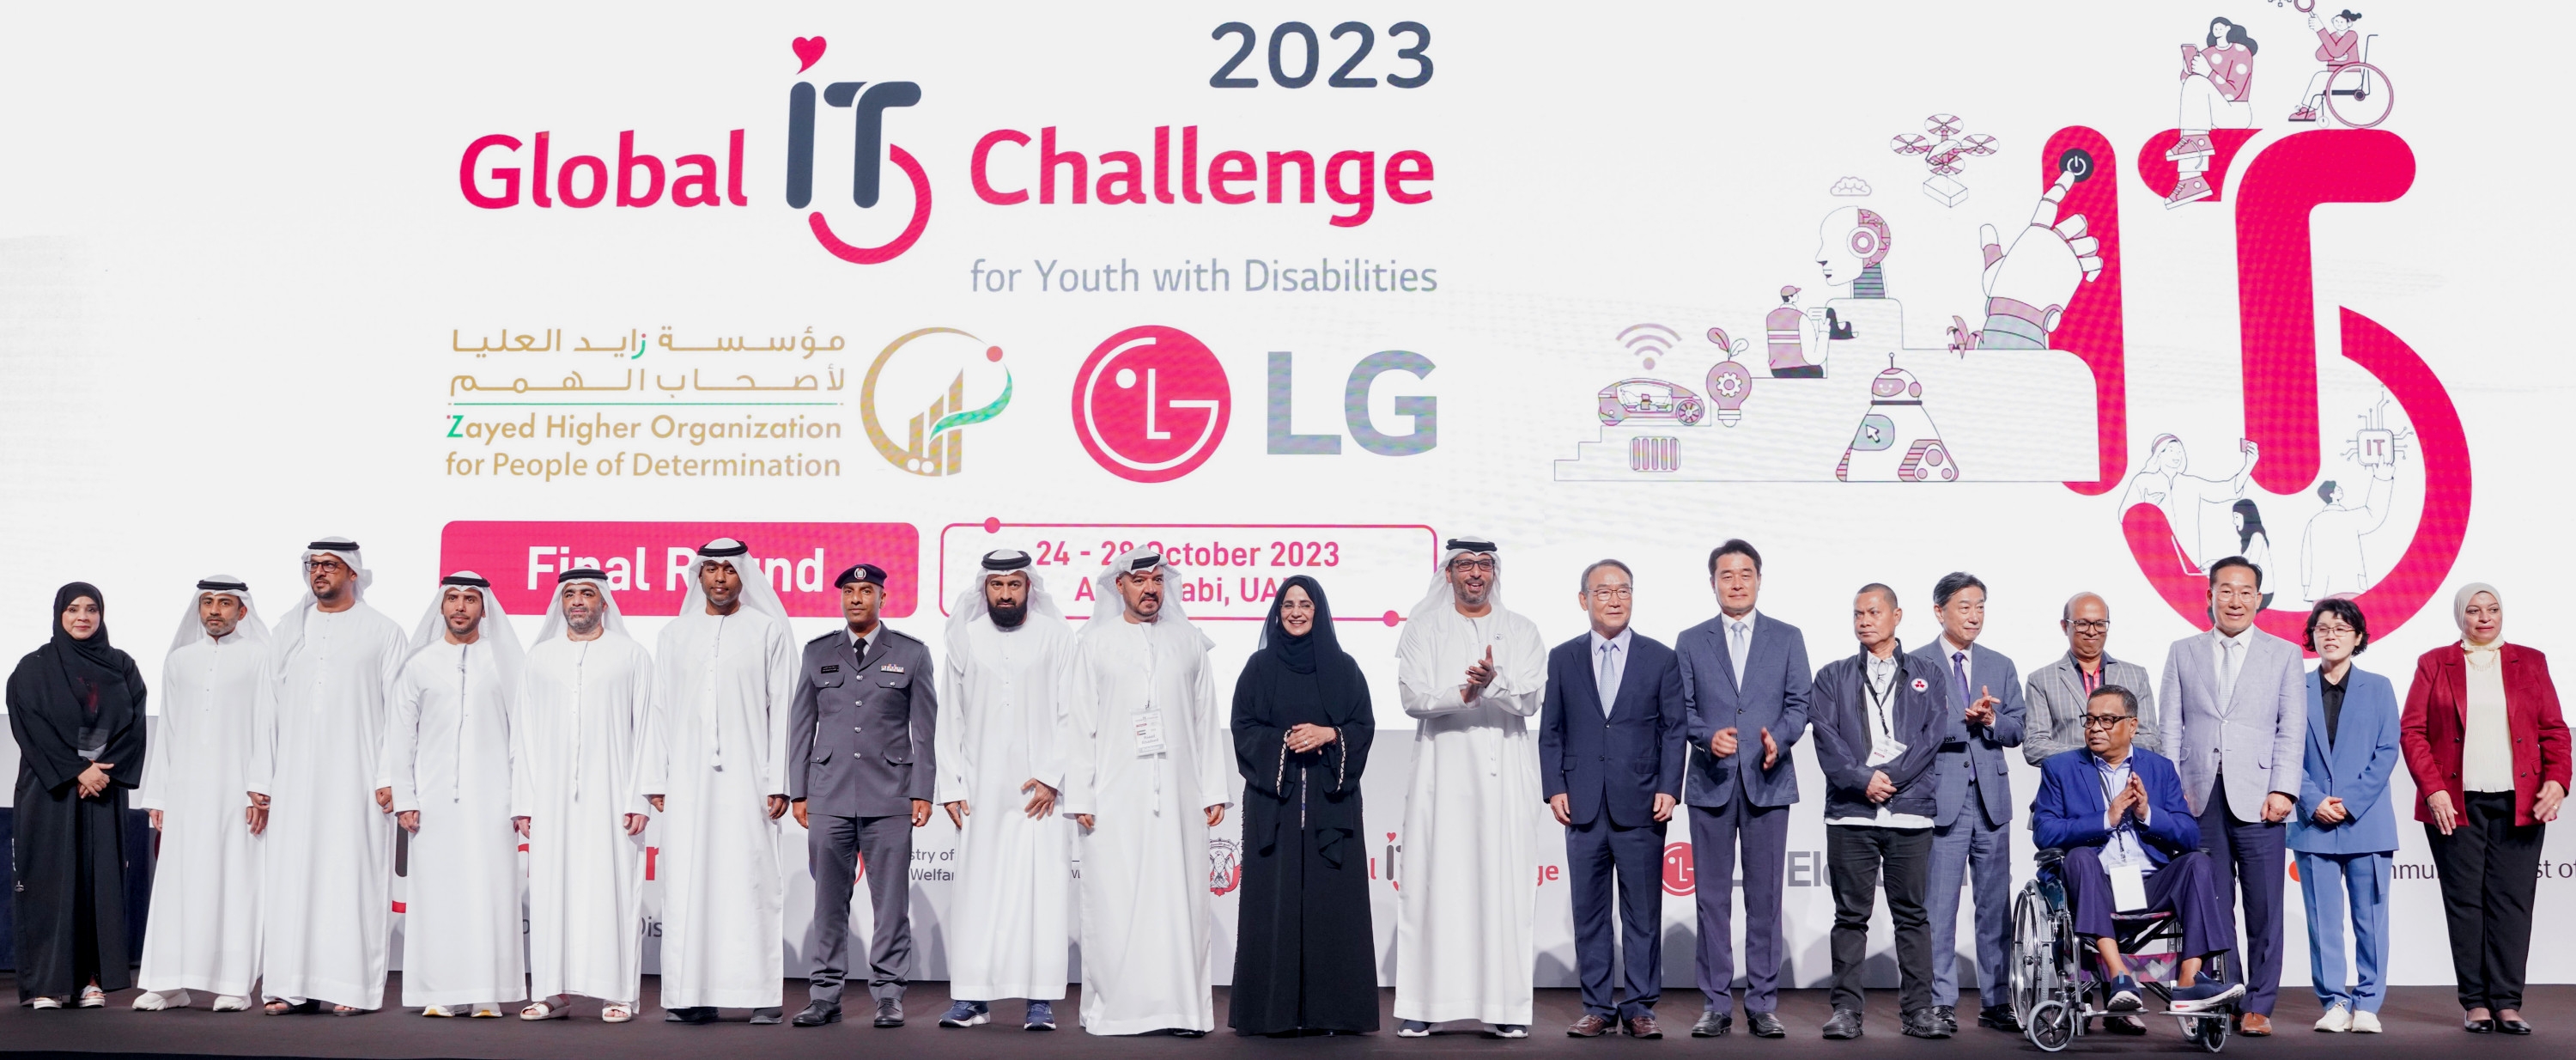 LG전자가 UAE 아부다비에서 '2023 GITC' 본선전을 개최했다./사진제공=LG전자